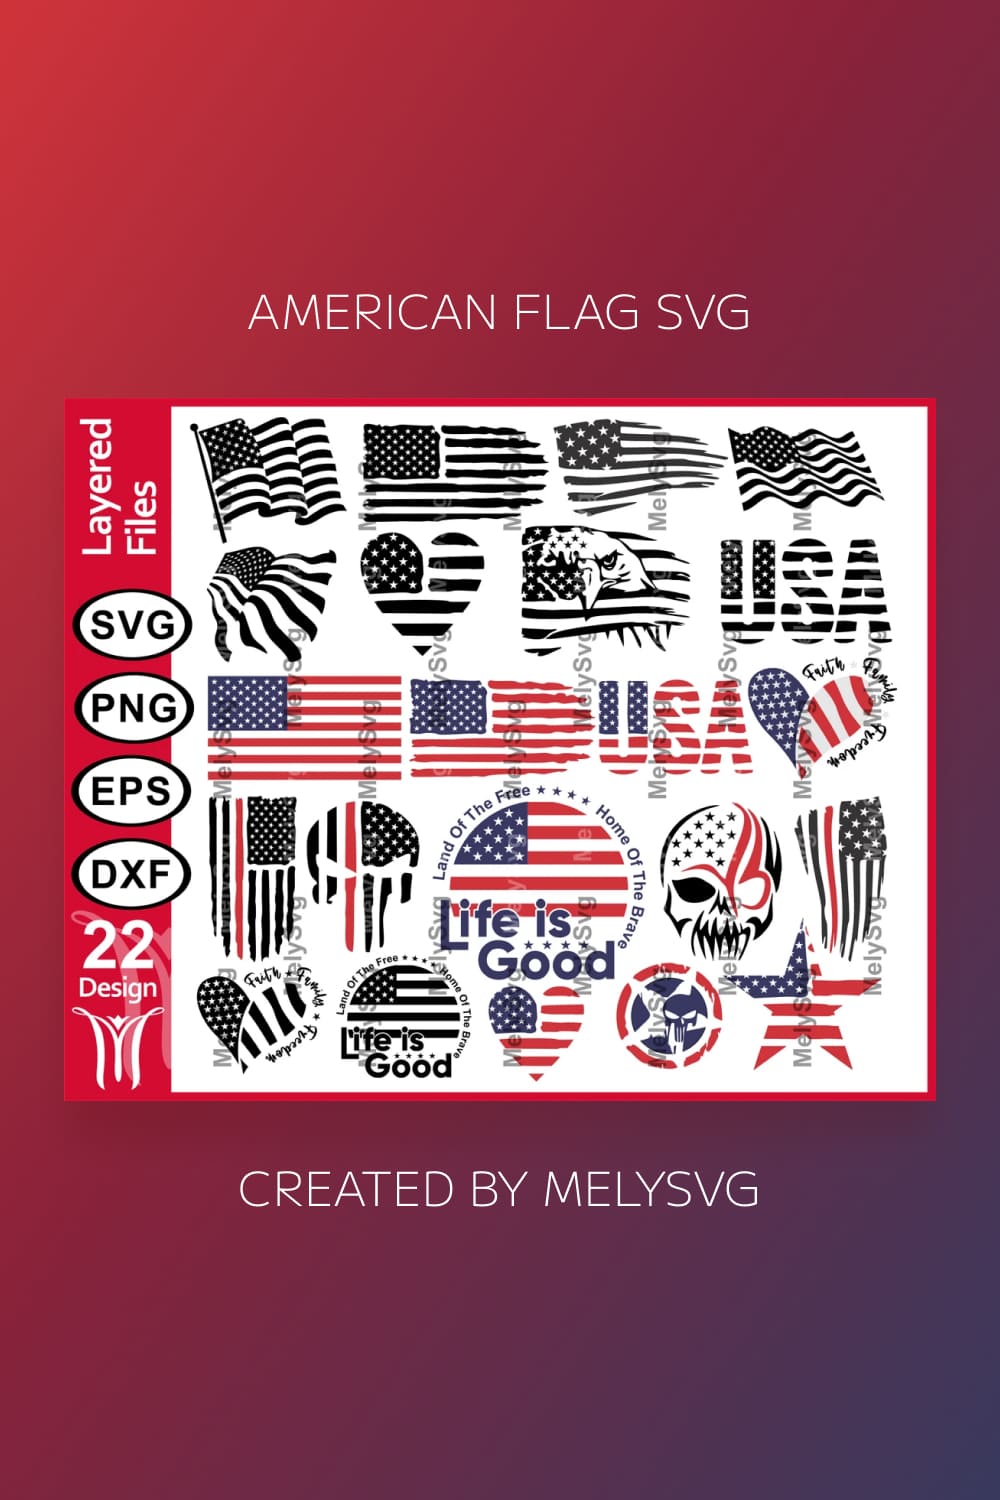 american flag svg pinterest image.